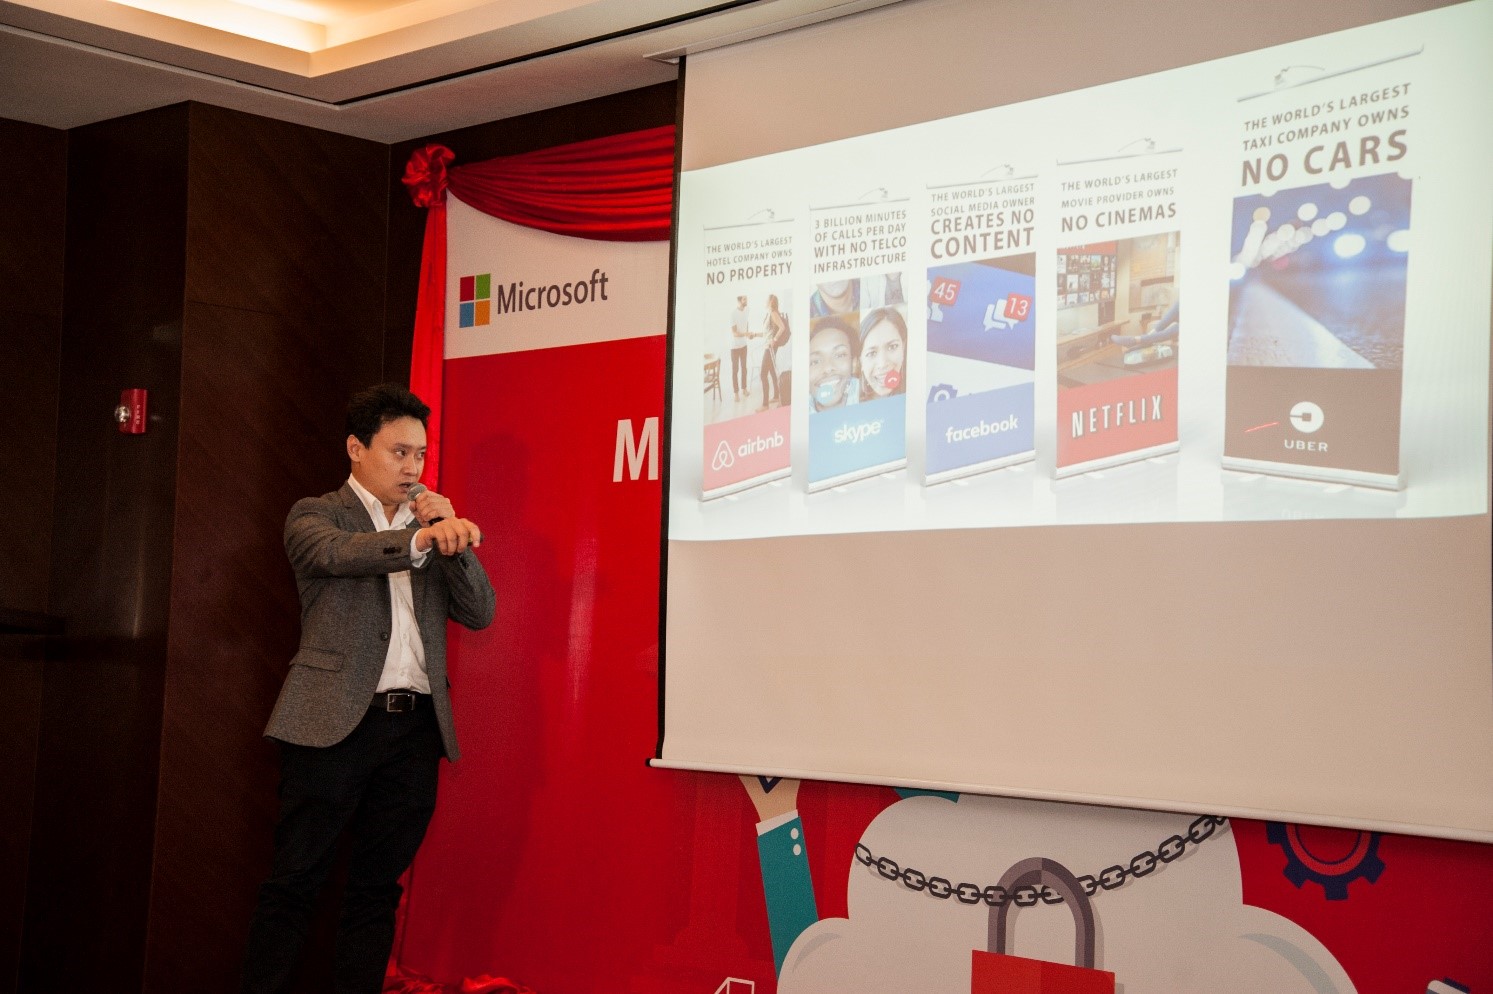 Mr Nam Nguyen – Softline Vietnam’s Business Development Manager